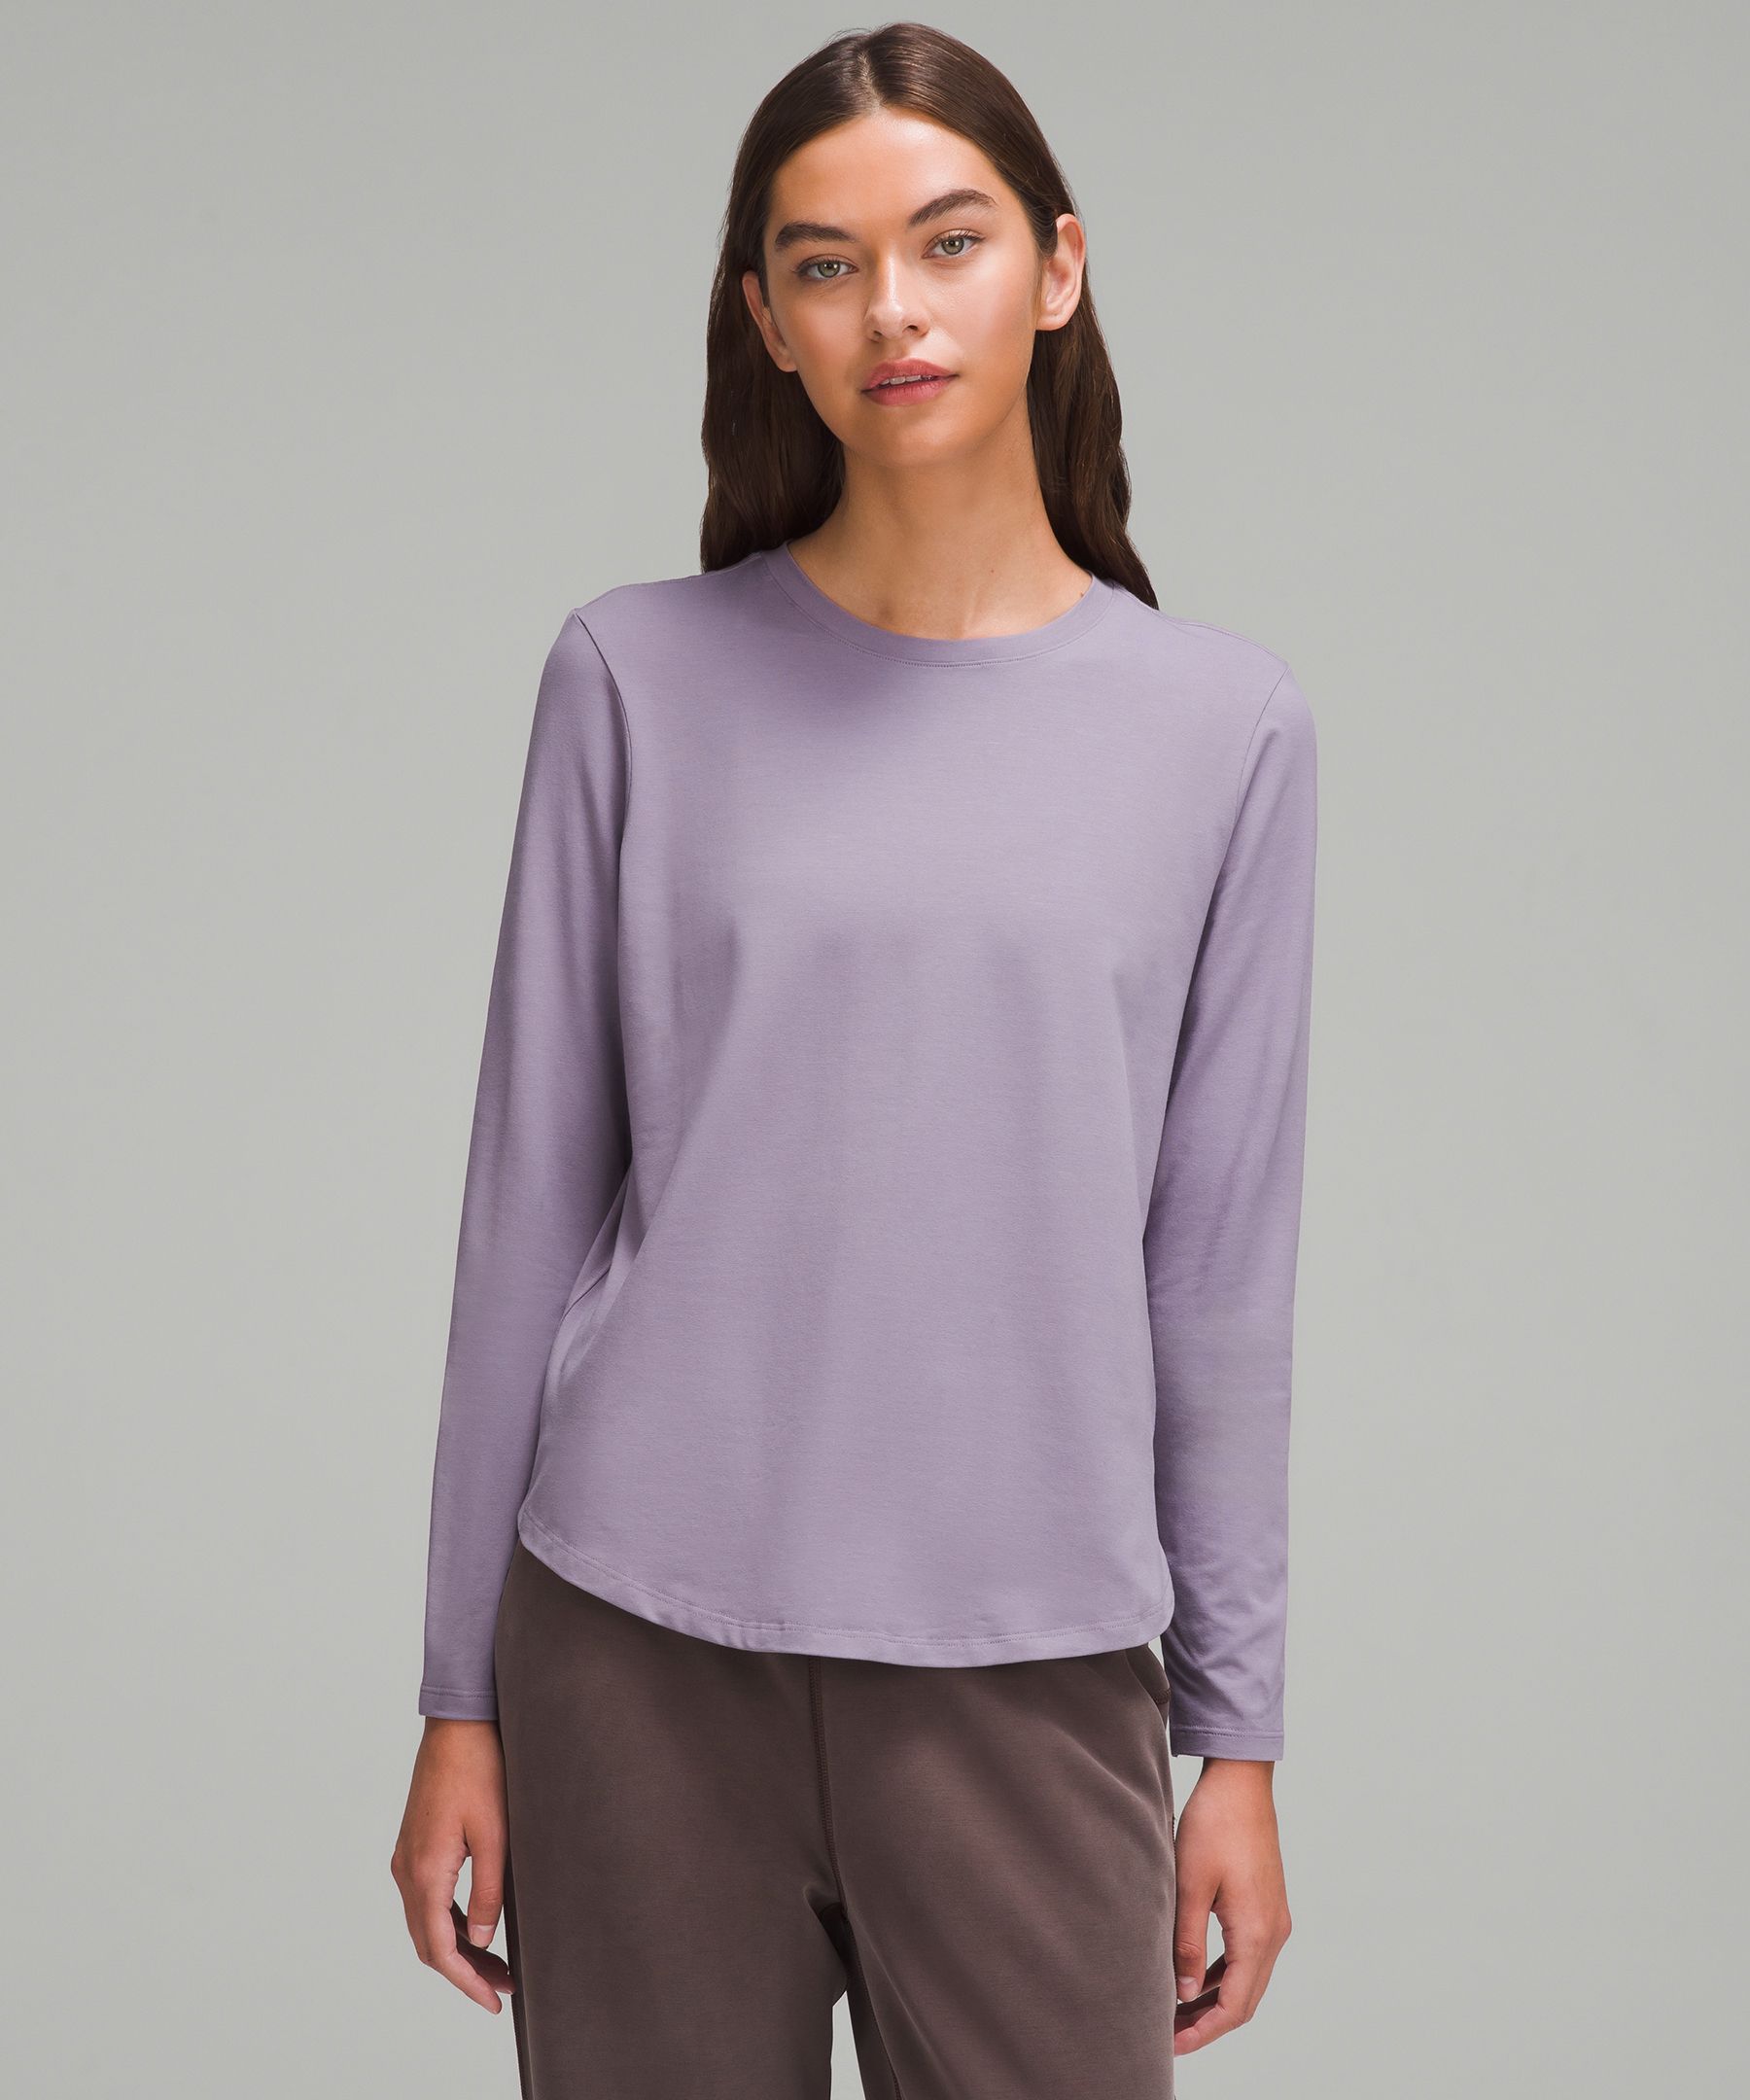 Lululemon Love Long-Sleeve Shirt - Purple - Size 8 Pima Cotton Fabric